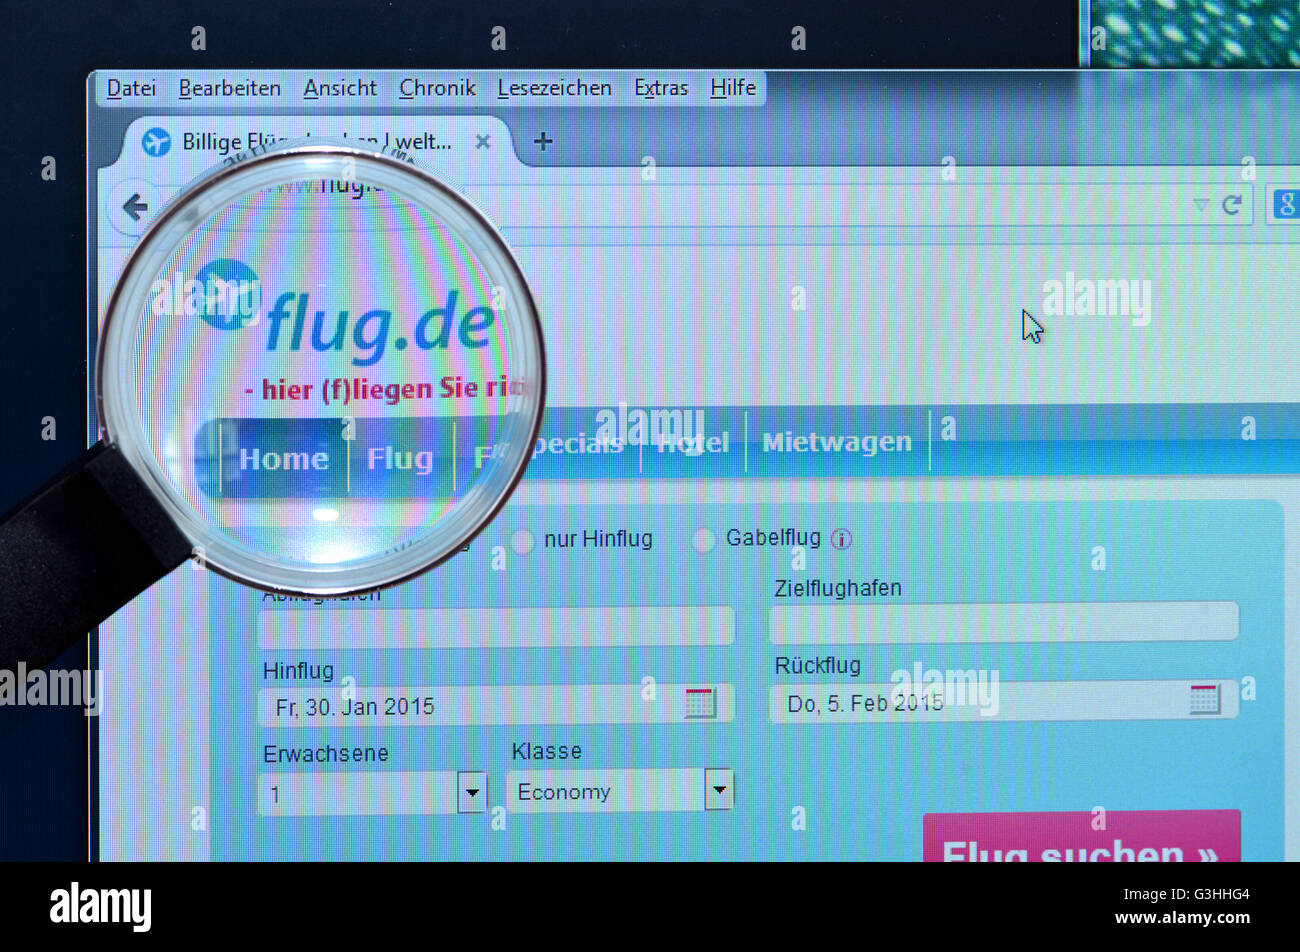 Societé flug.de, homepage, Internet, Bildschirm Foto Stock